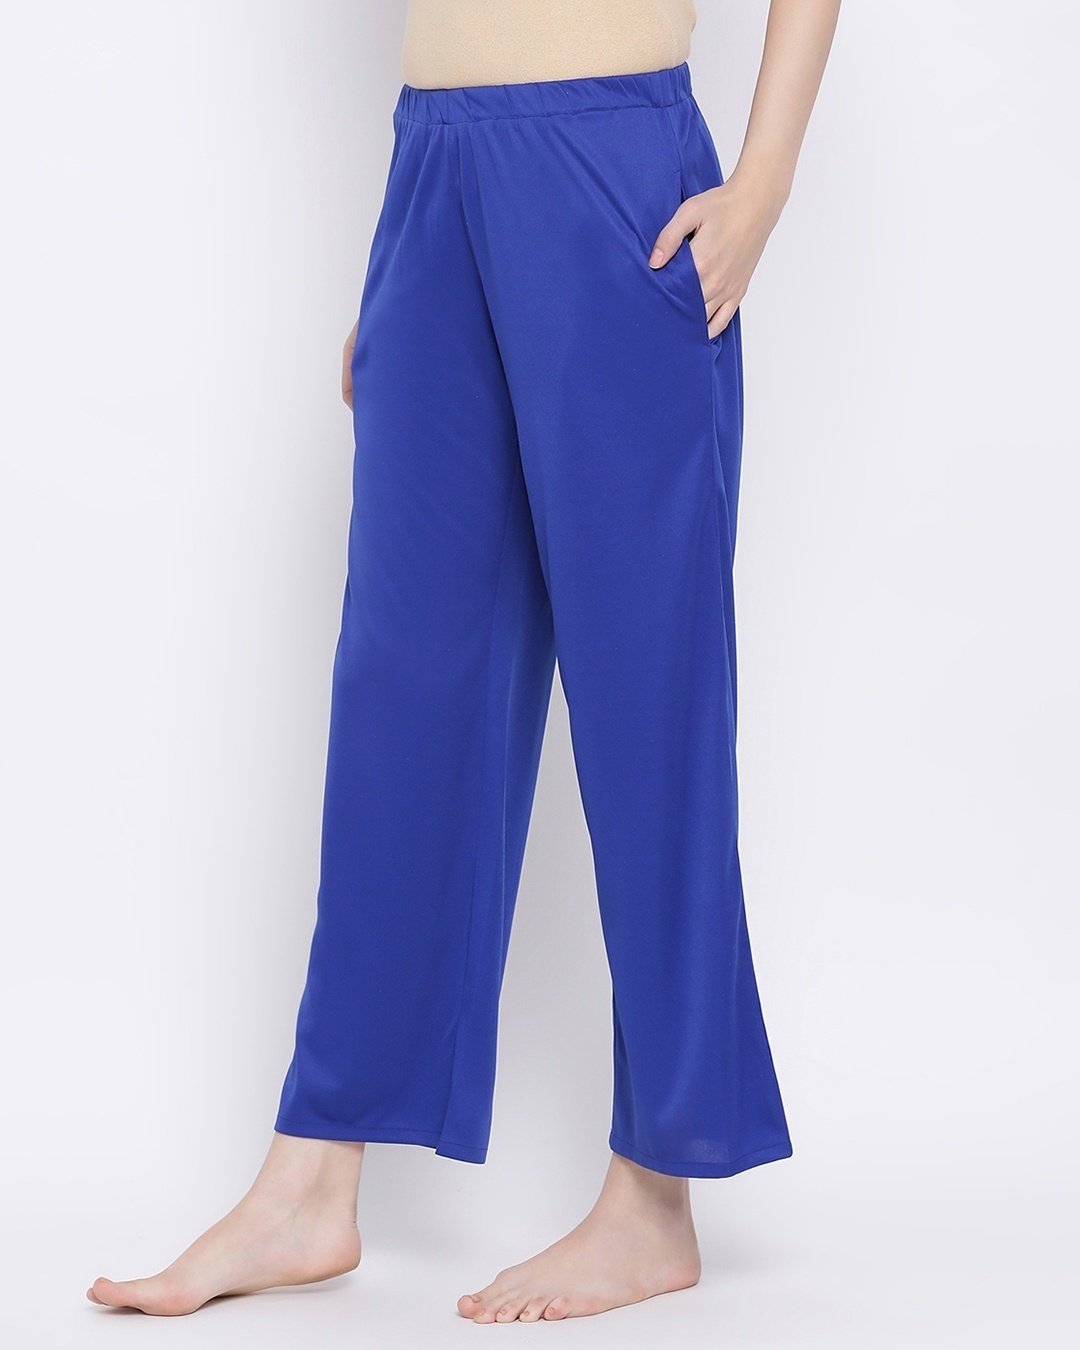 Shop Chic Basic Pyjama In Blue-Design